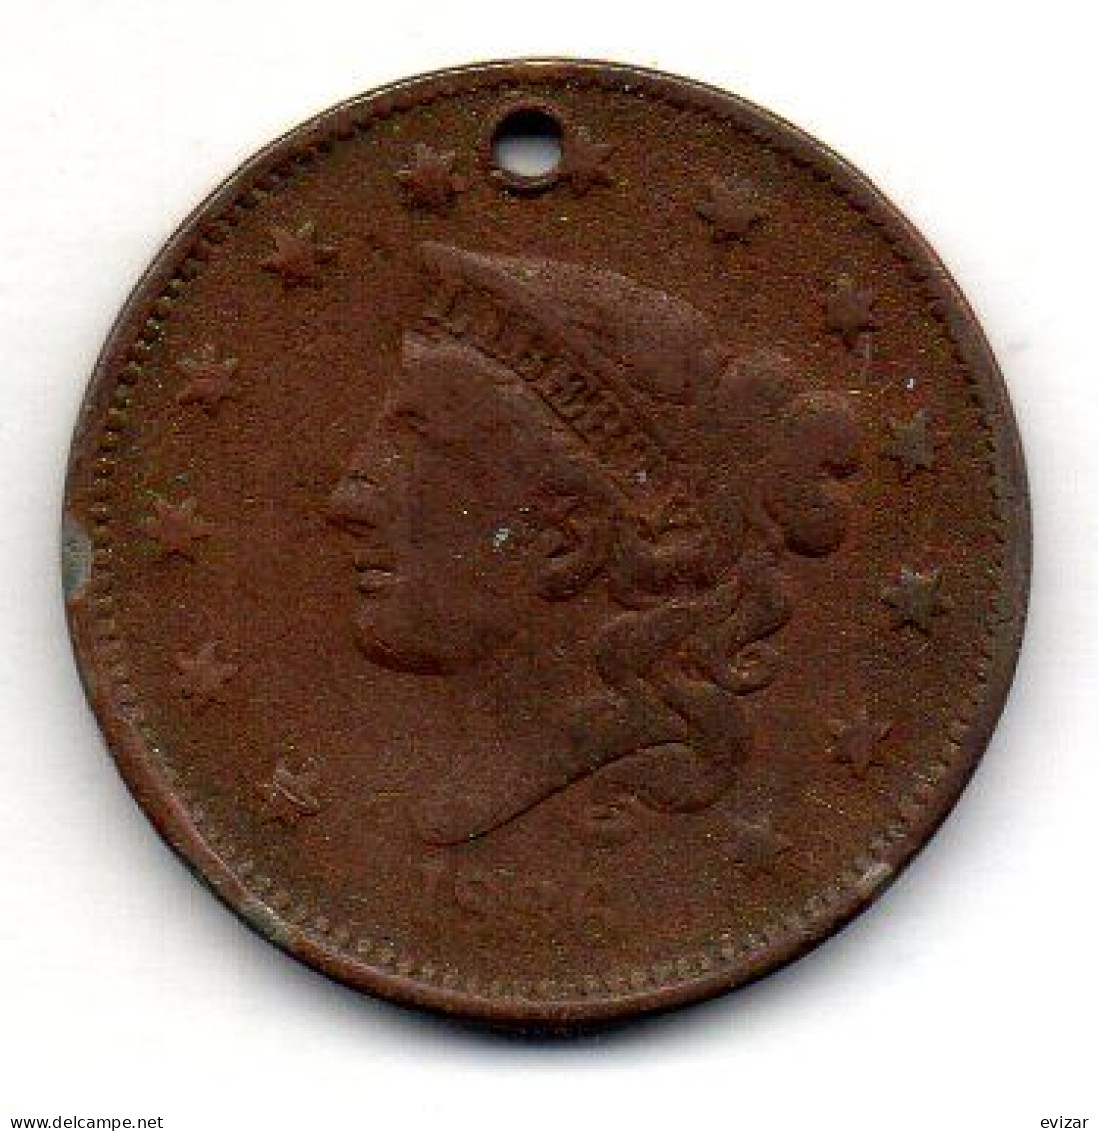 U.S.A, 1 Cent, Copper, Year 1836, KM # 45.1, HOLED. - 1816-1839: Coronet Head